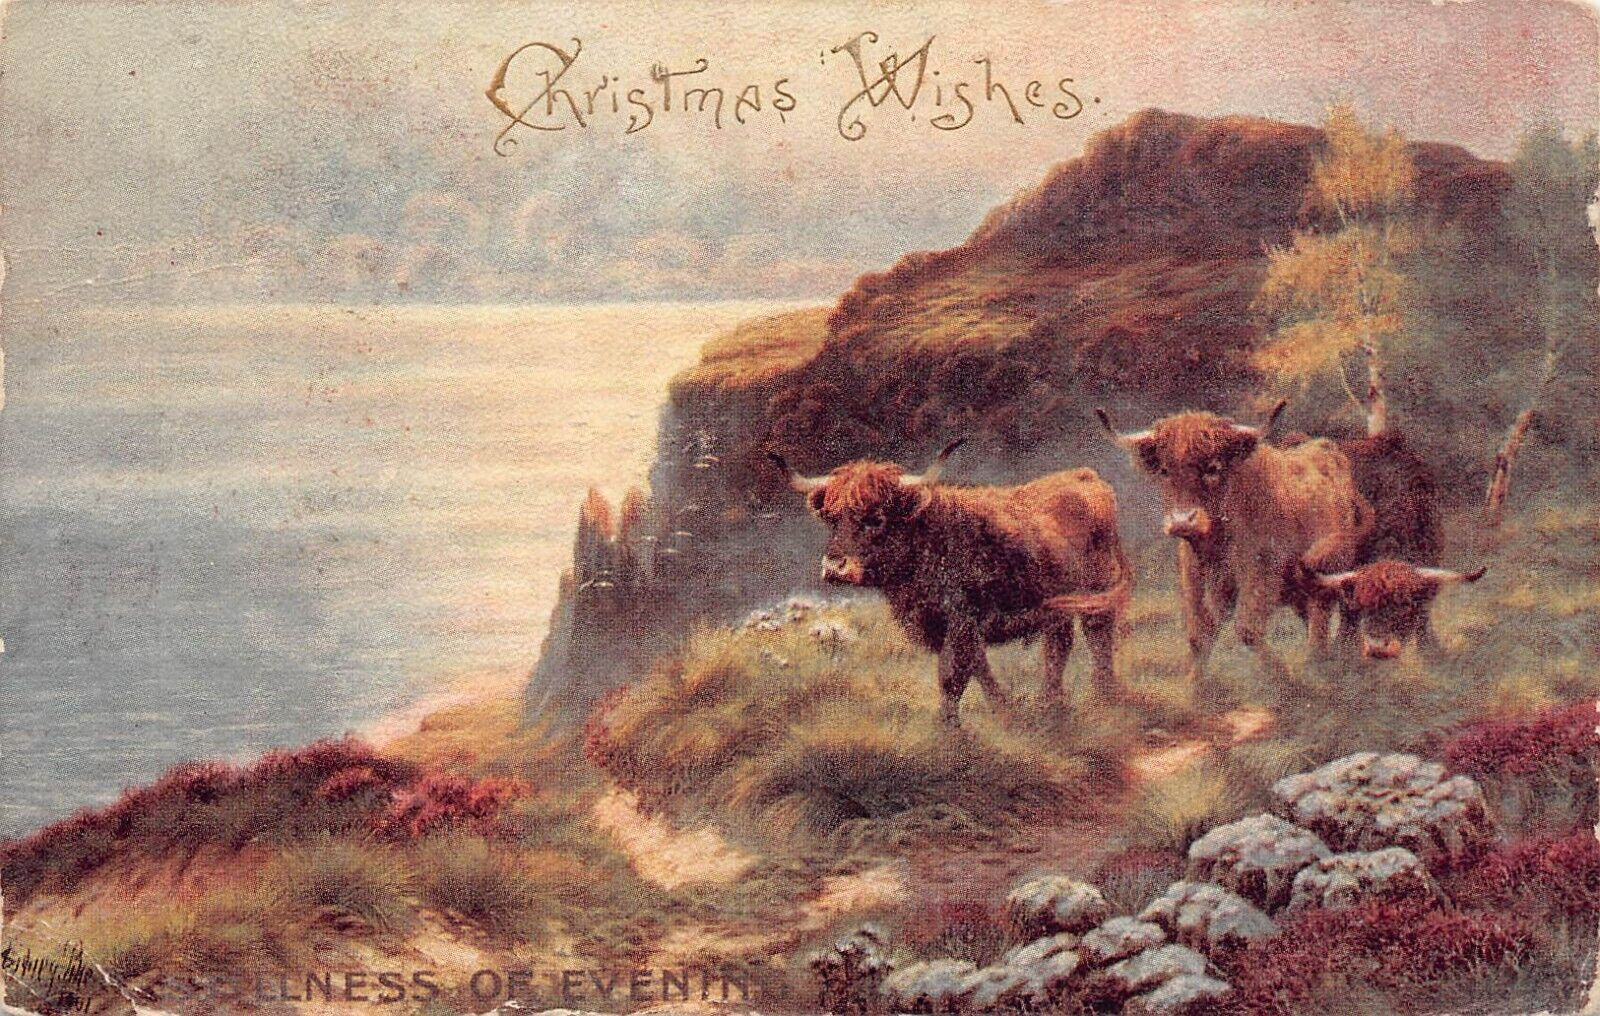 Antique c1911 Christmas Wishes Postcard Sidney Pike Stillness of Evening M3